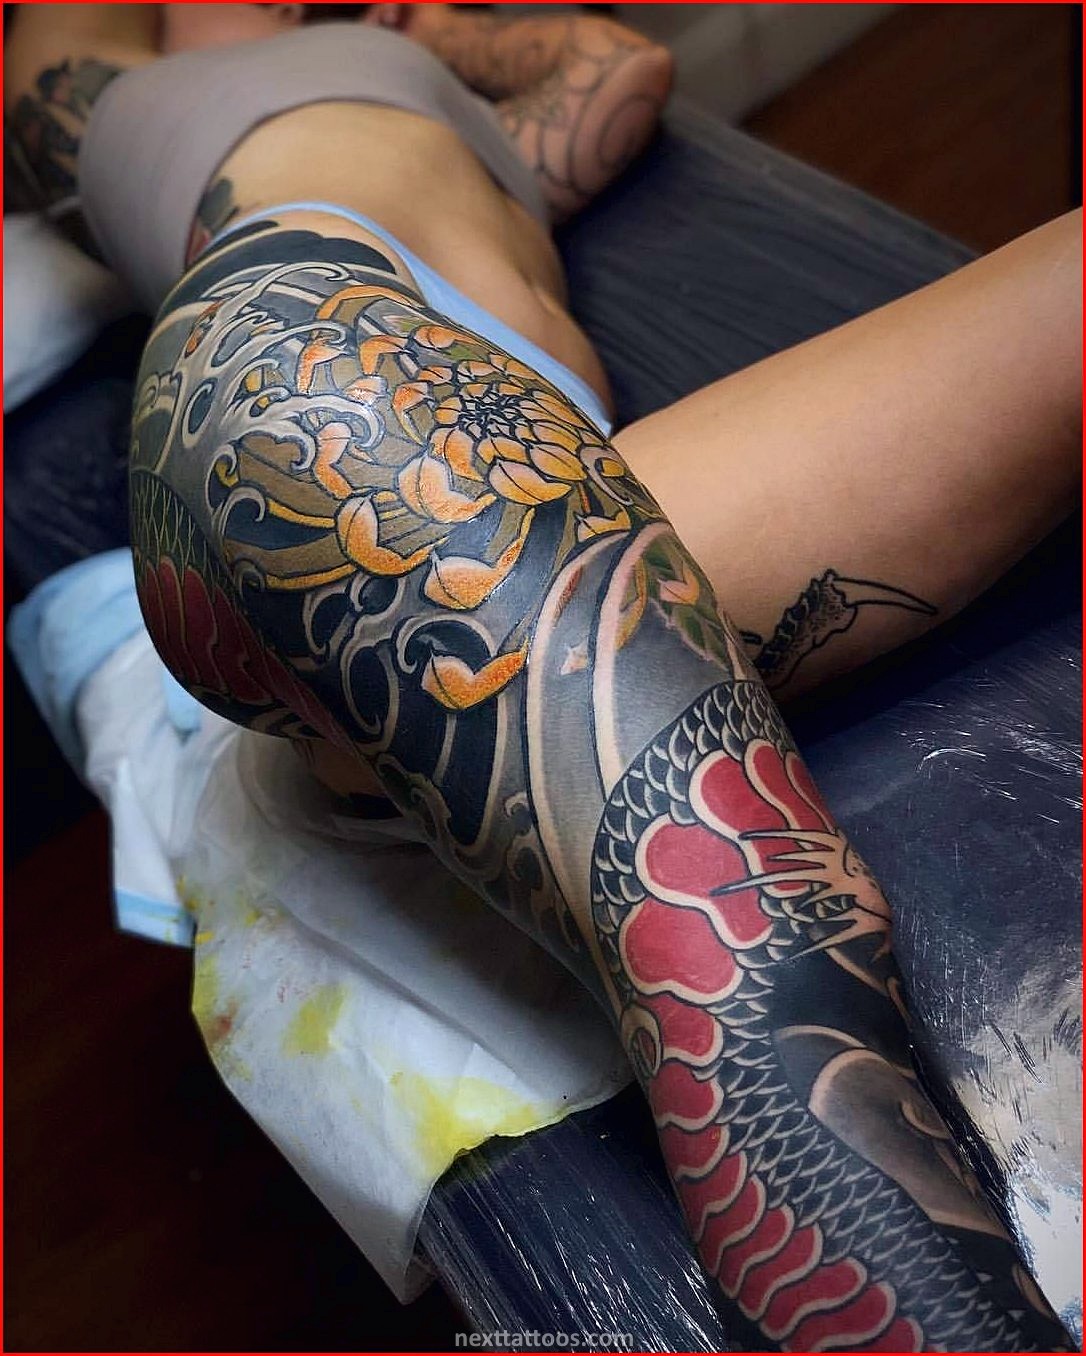 Leg Sleeve Tattoos For Womens